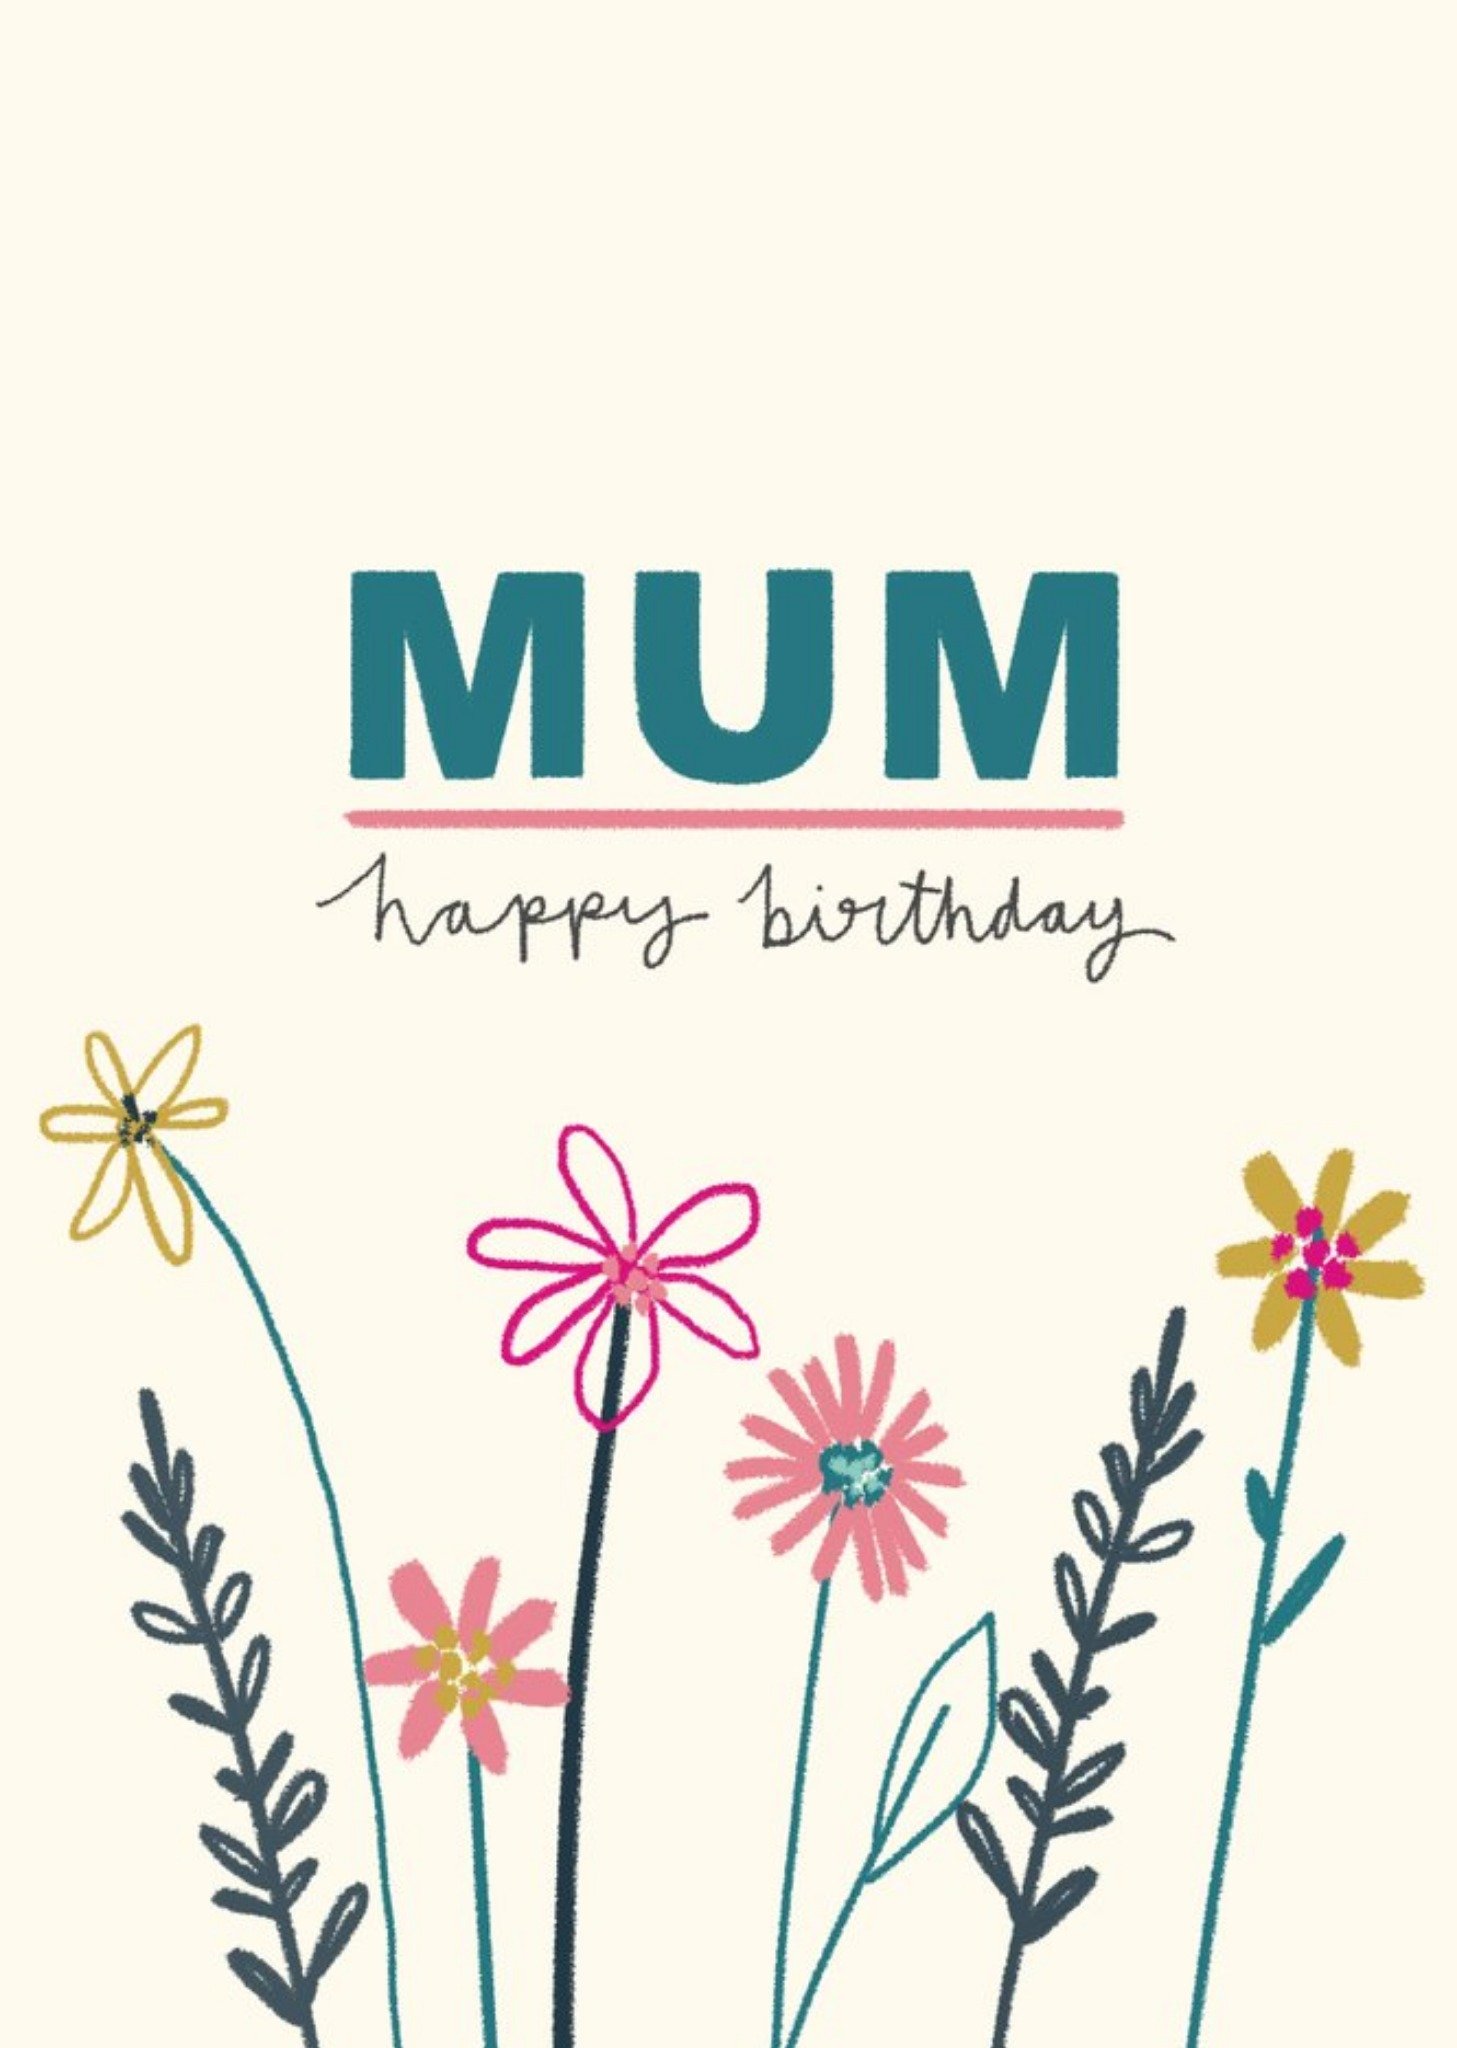 Moonpig Birthday Card - Mum - Floral Ecard